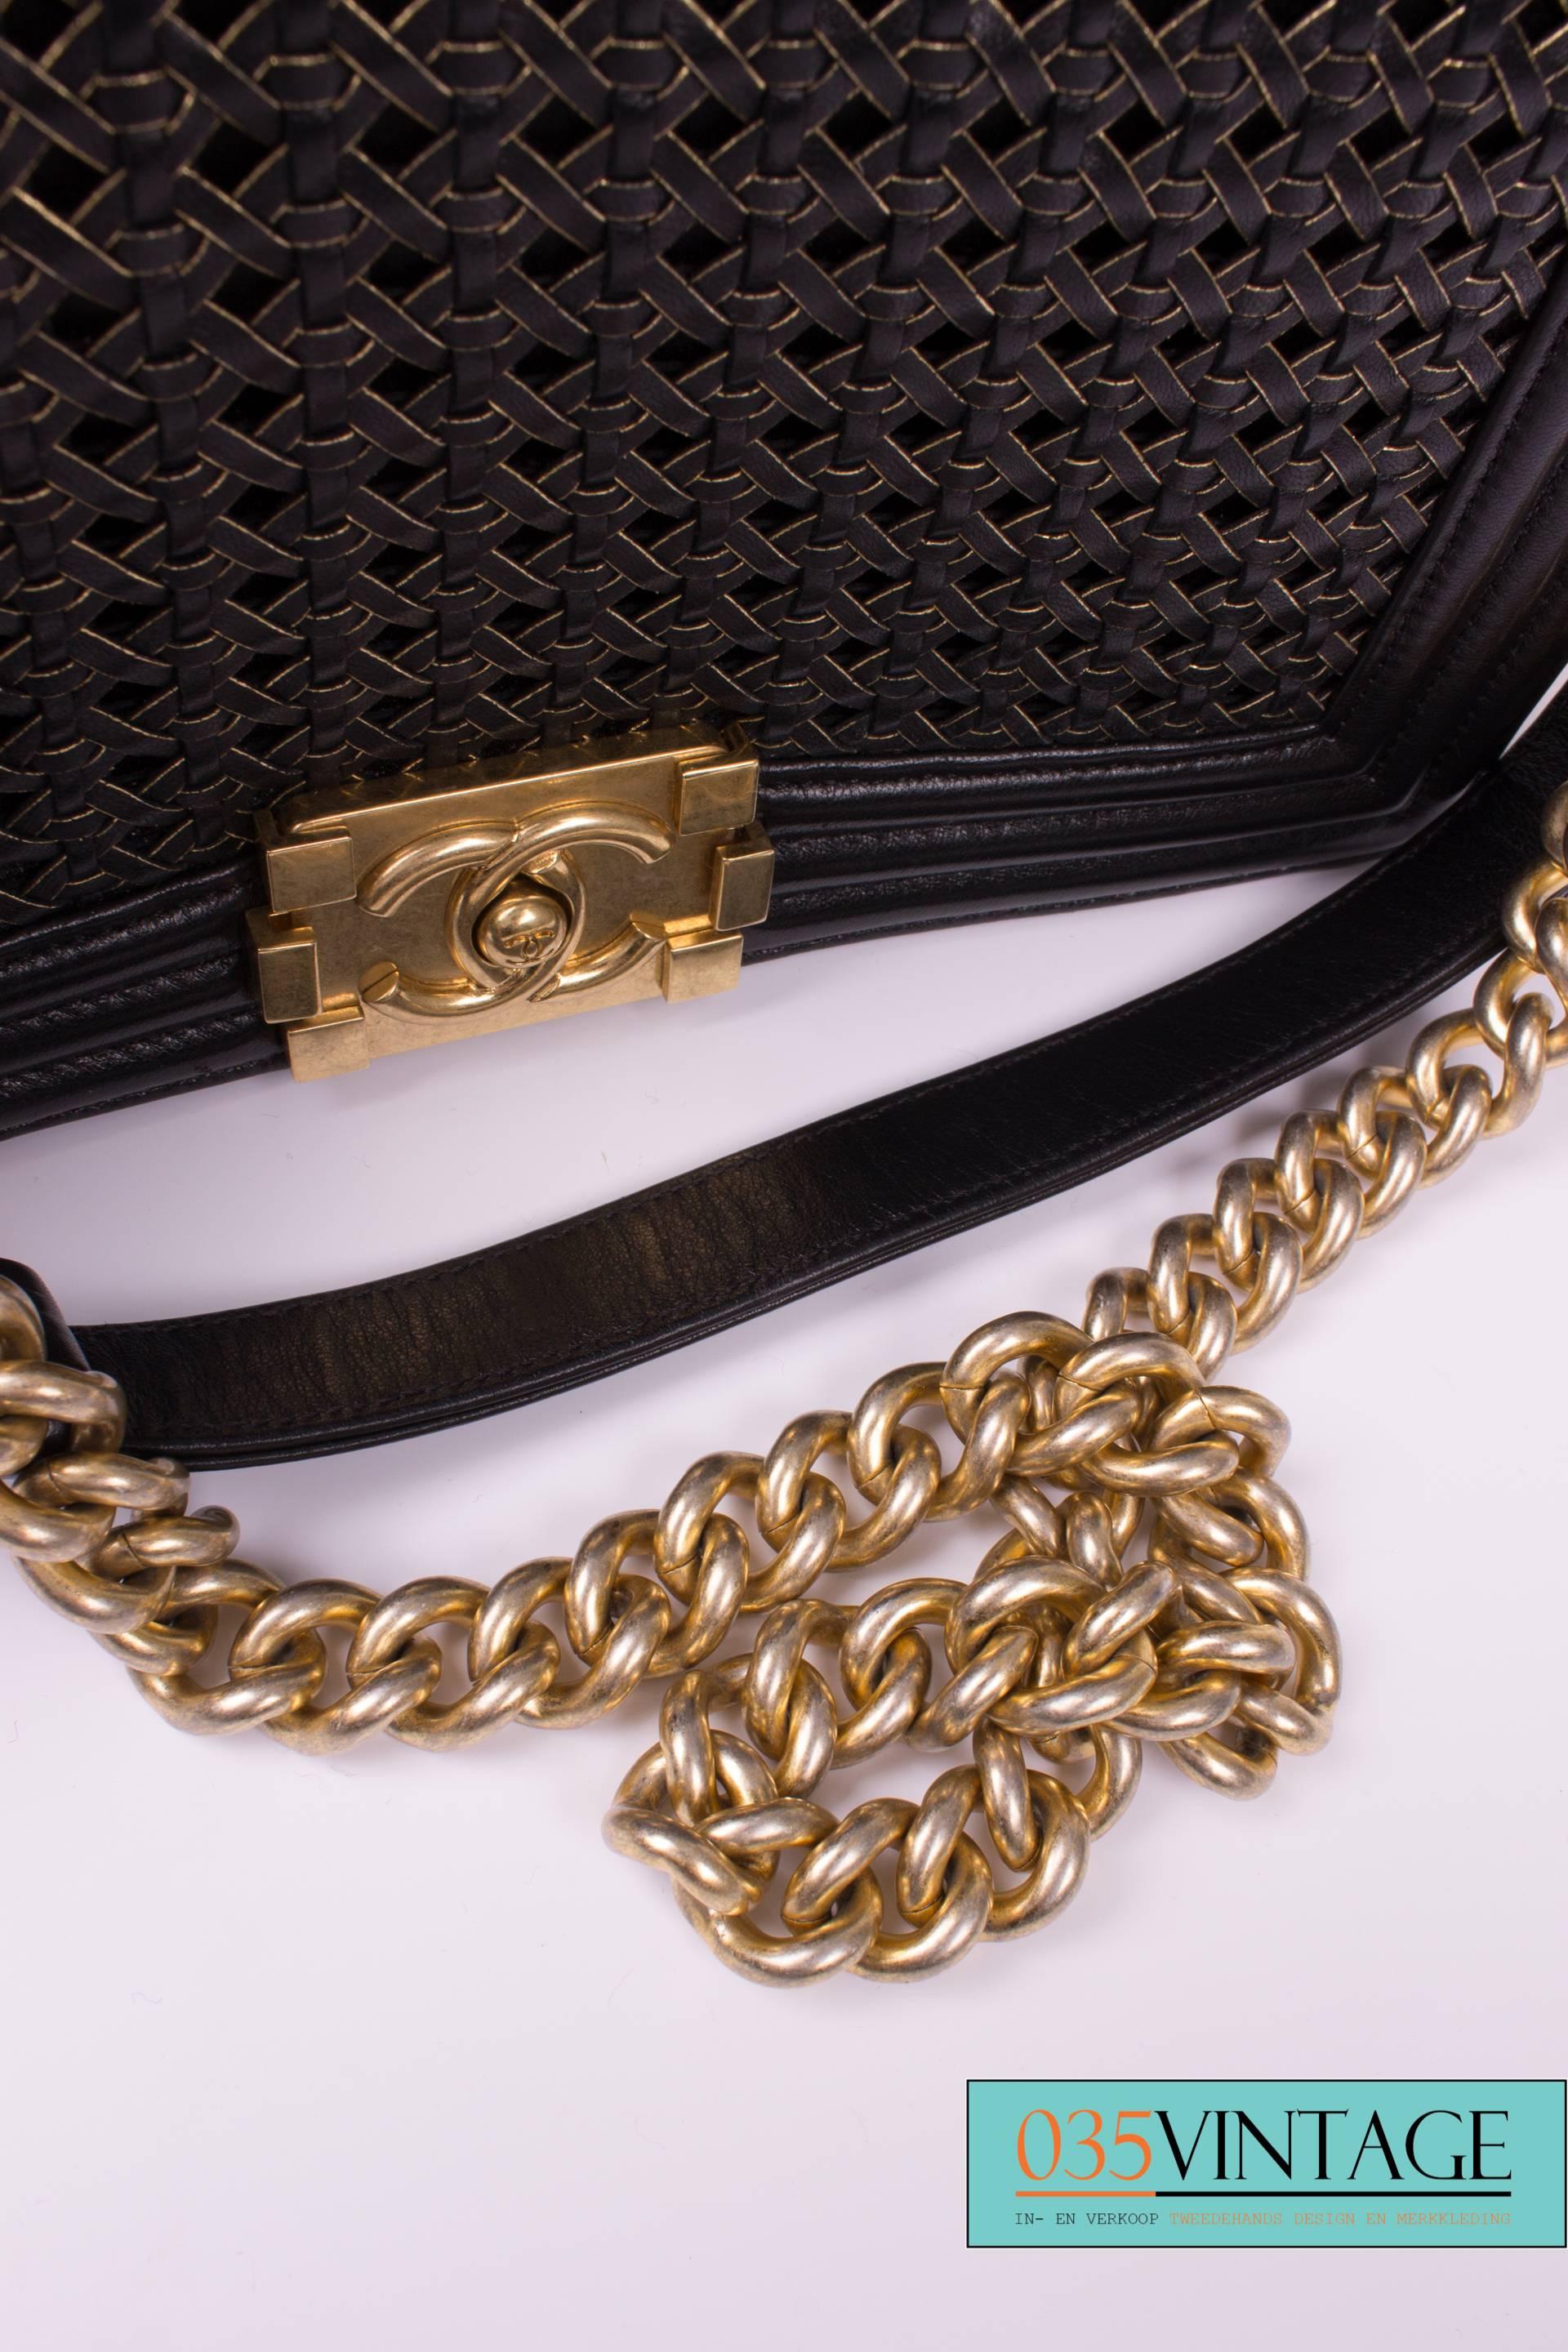 Black Chanel Le Boy Bag Woven Limited Edition Spring 2014 - black/gold 